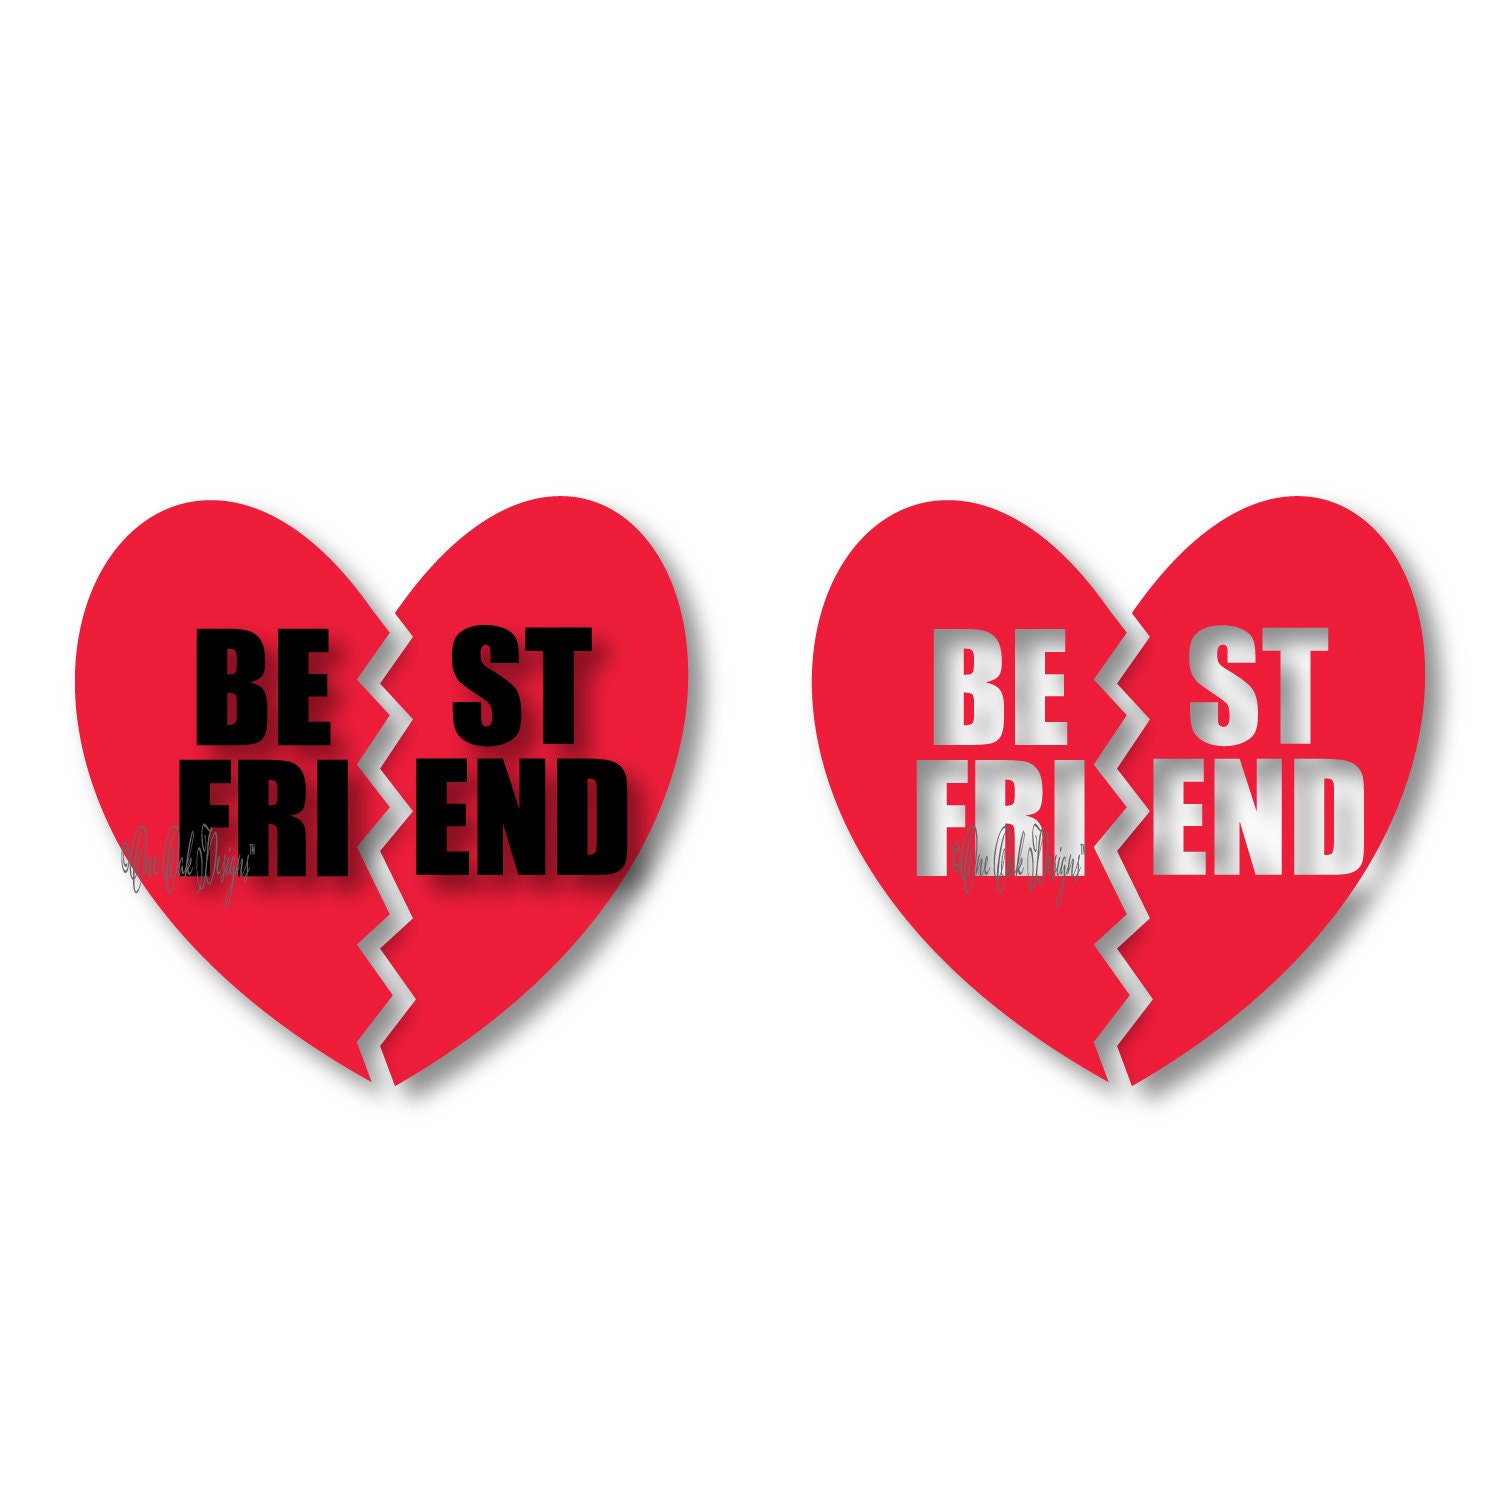 Download Best Friend Split Heart File DXF PDF ai eps png jpg svg | Etsy